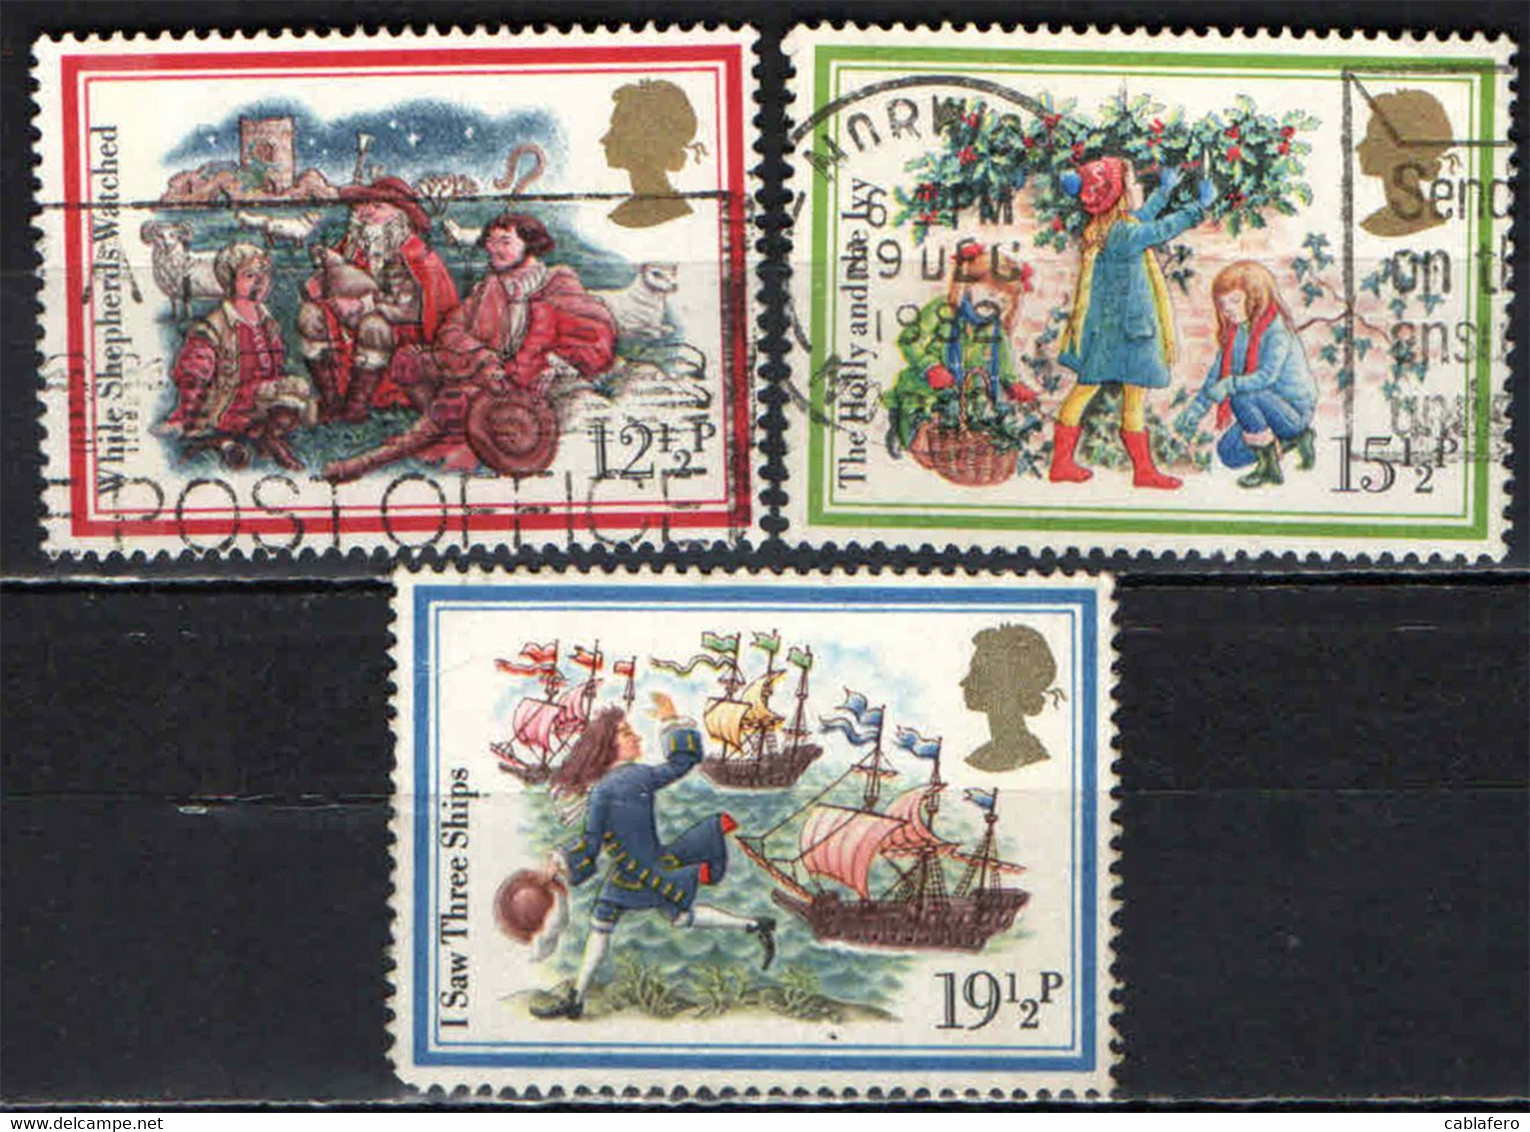 GRAN BRETAGNA - 1982 - NATALE - CHRISTMAS - I "CAROLS" - CANTI NATALIZI - I PASTORI VEGLIANO - USATI - Used Stamps